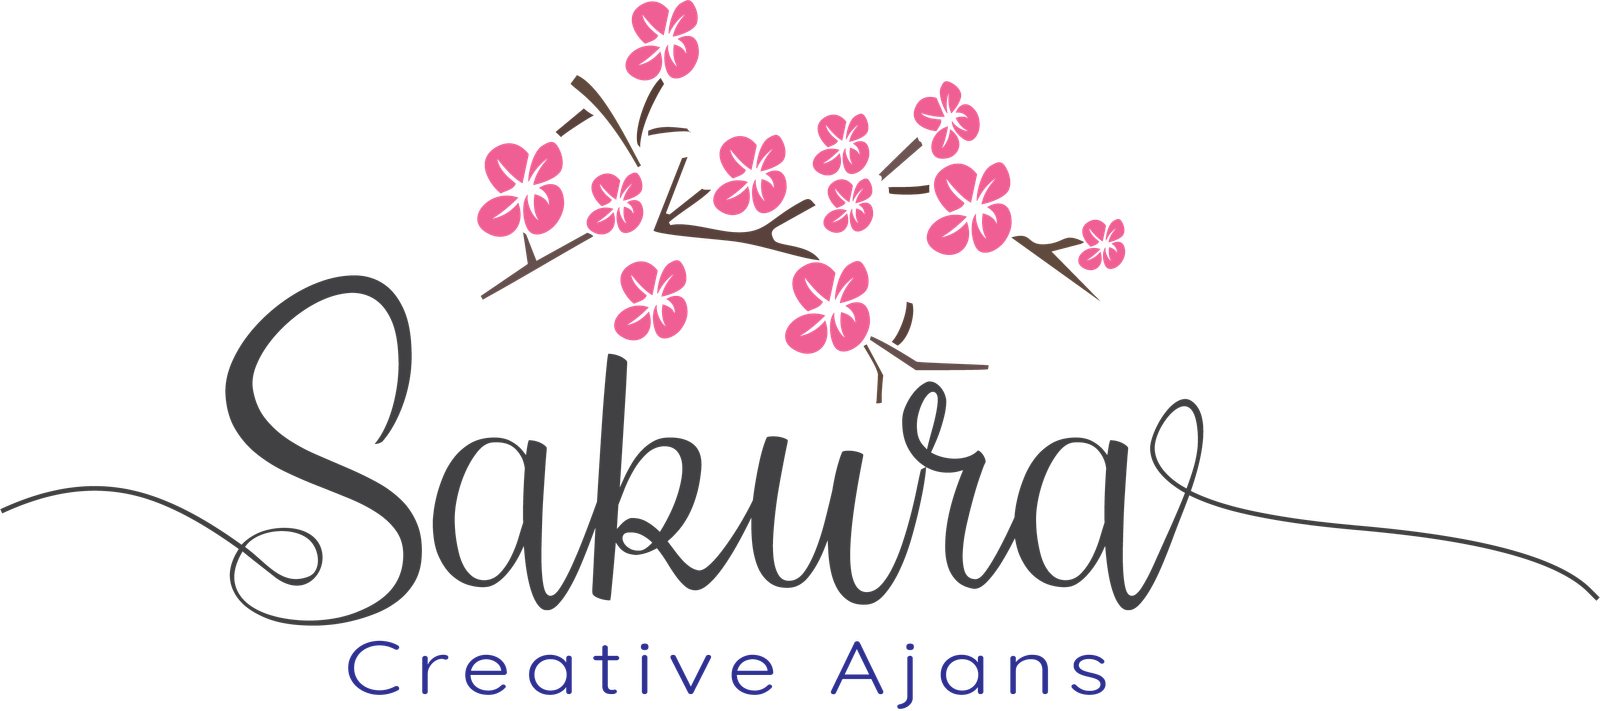 Sakura Kreatif Ajans